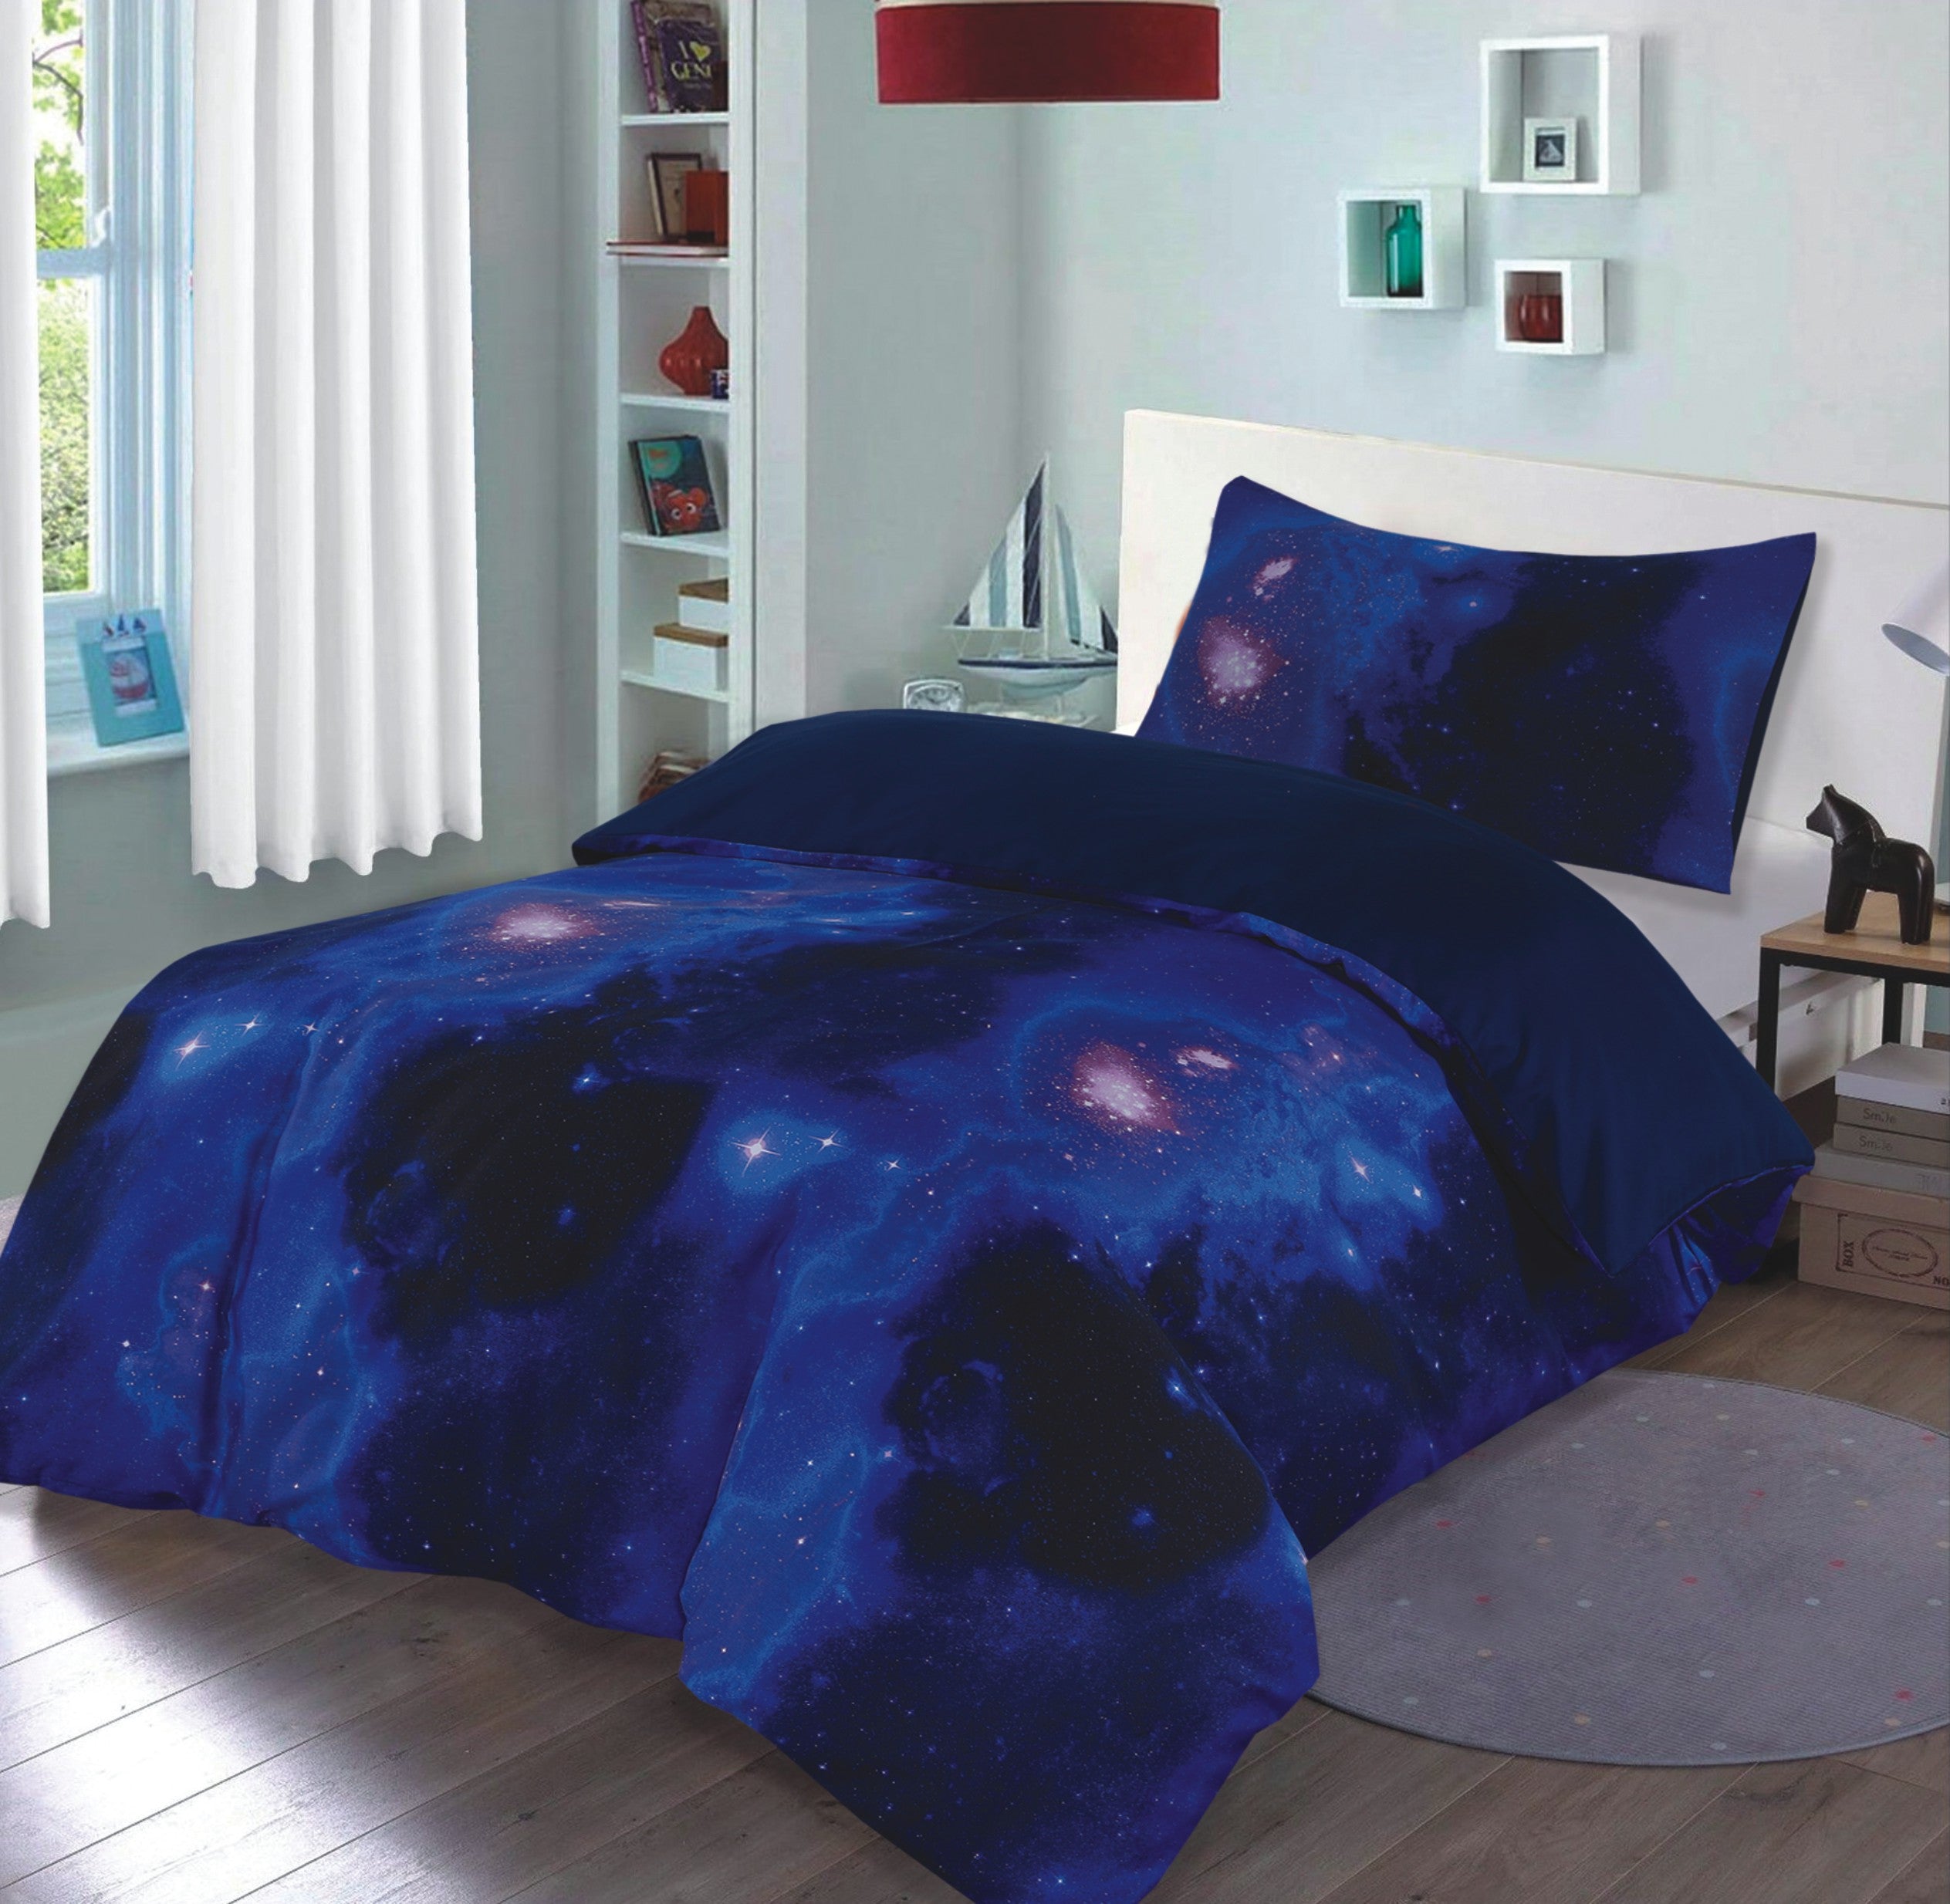 Kids bedding - Duvet Cover - Twin Size - Galaxy print